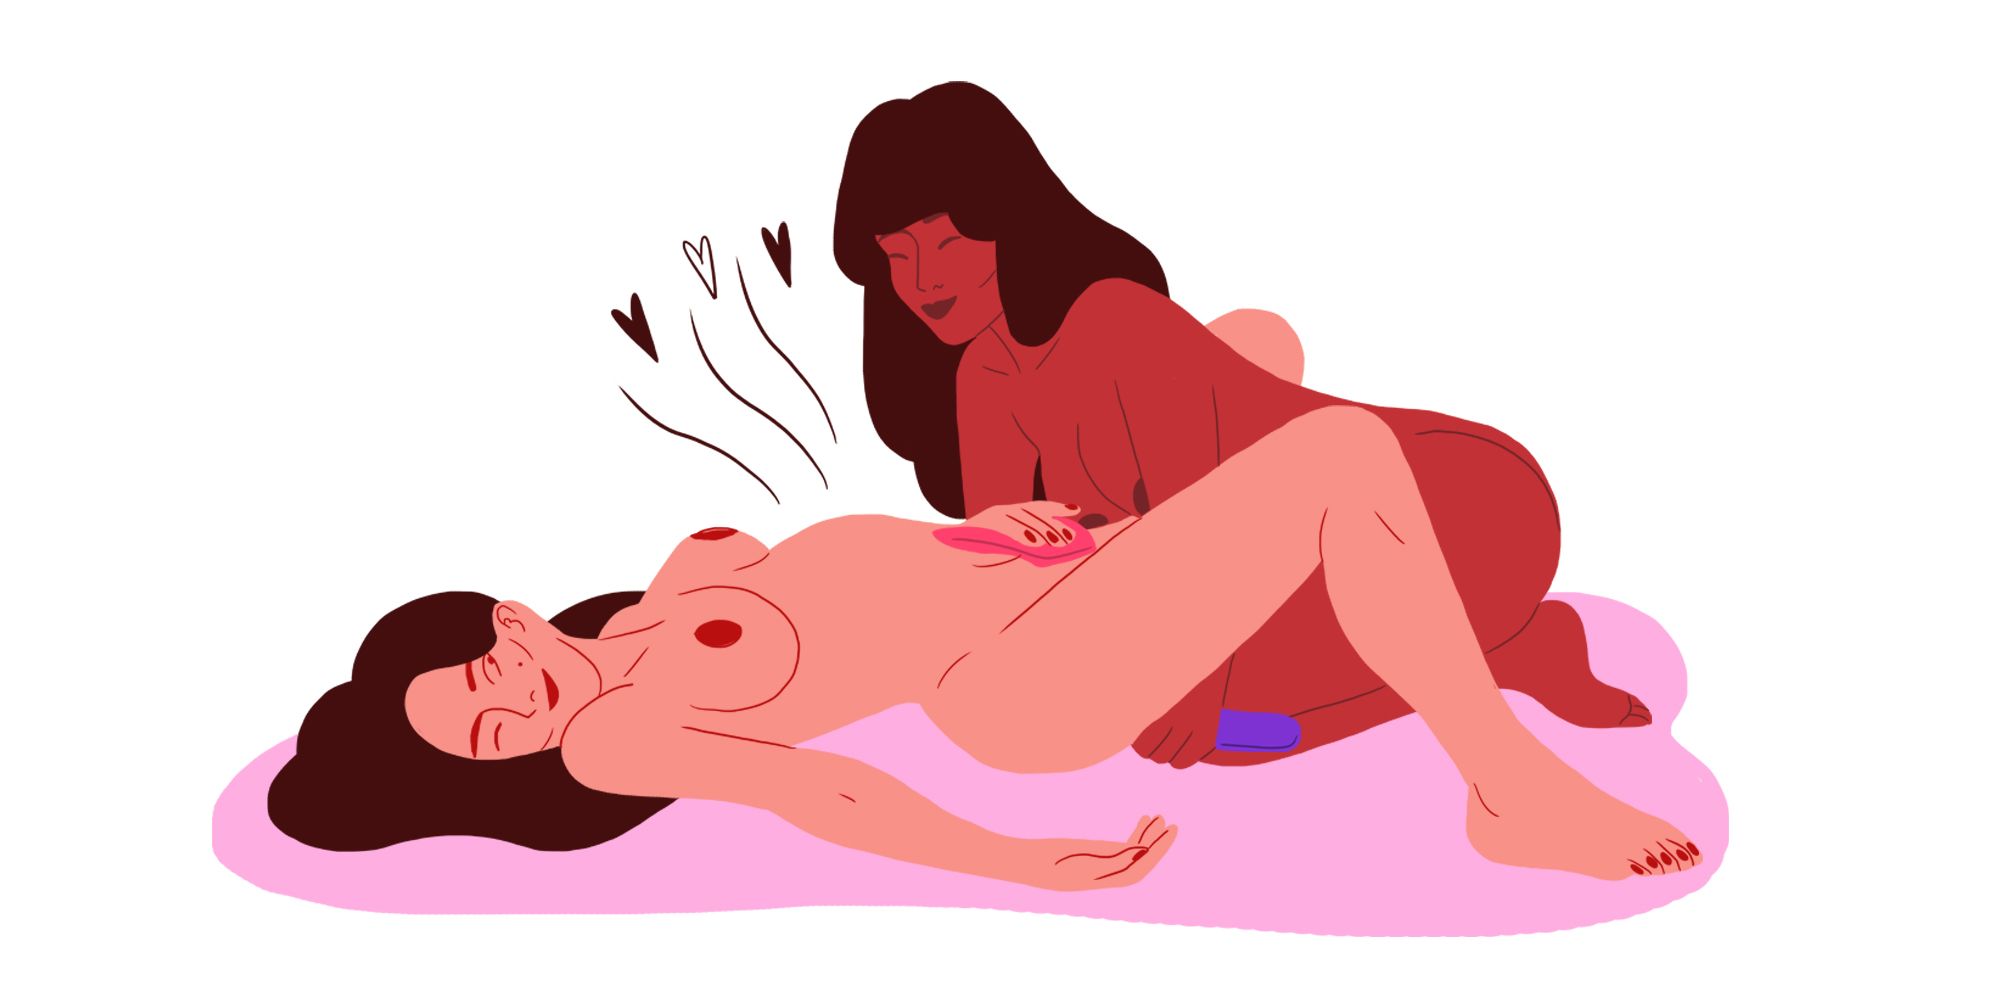 37 Hot Lesbian Sex Positions - Best Lesbian Sex Ideas and Positions